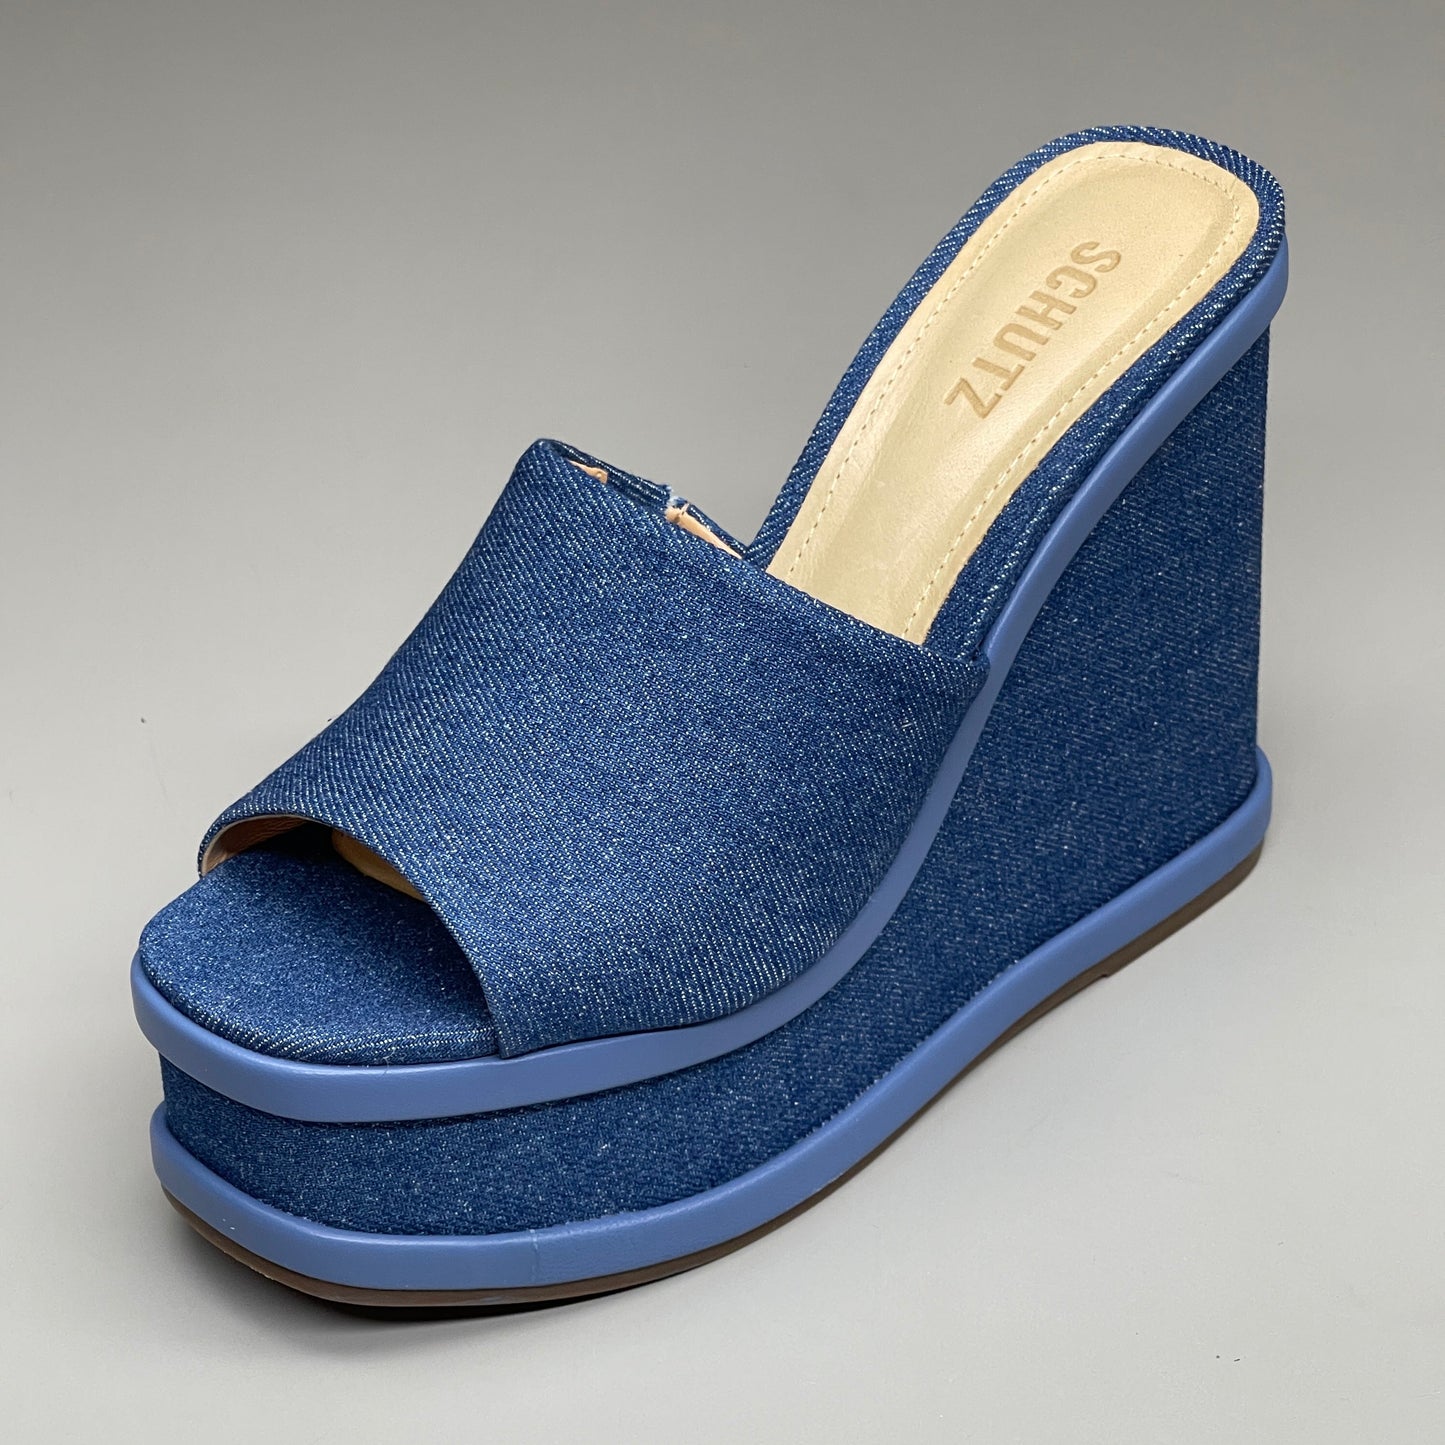 SCHUTZ Dalle Denim Women's Wedge Sandal Blue Platform Shoe Sz 6.5B (New)